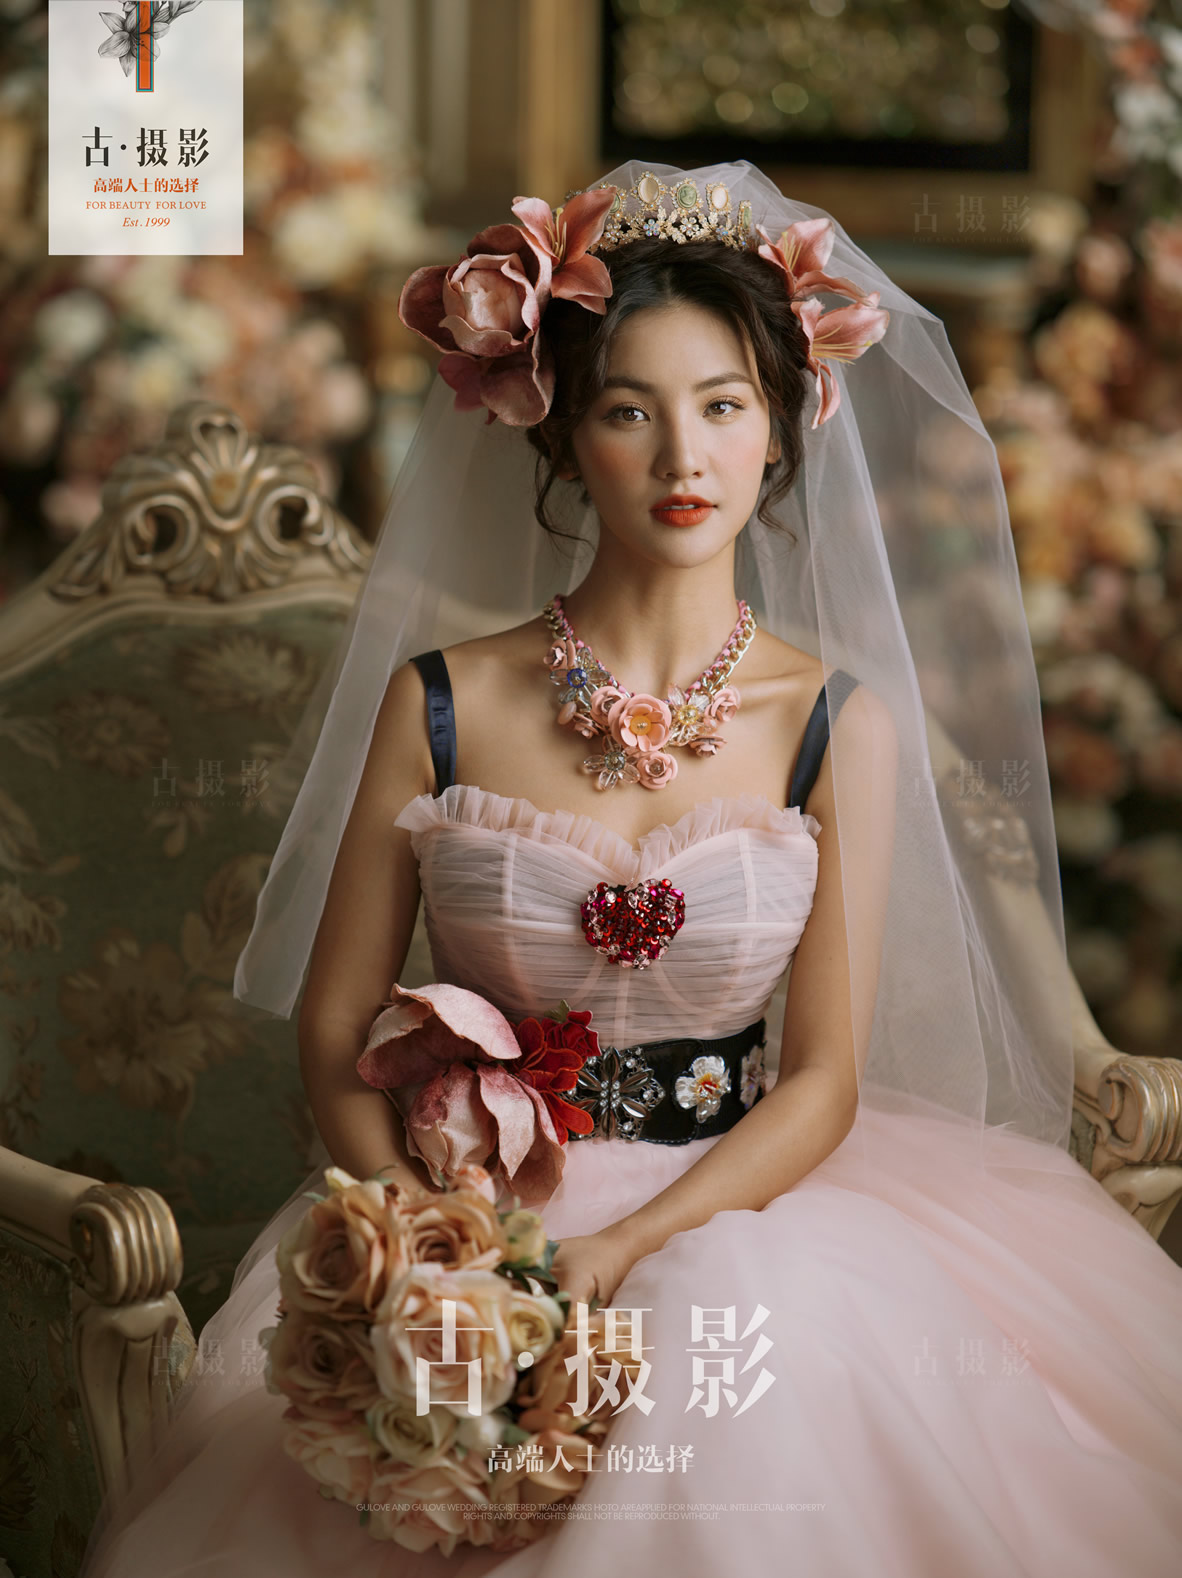 Light Luxury系列《怦然心动》 - 明星范 - 古摄影婚纱艺术-古摄影成都婚纱摄影艺术摄影网